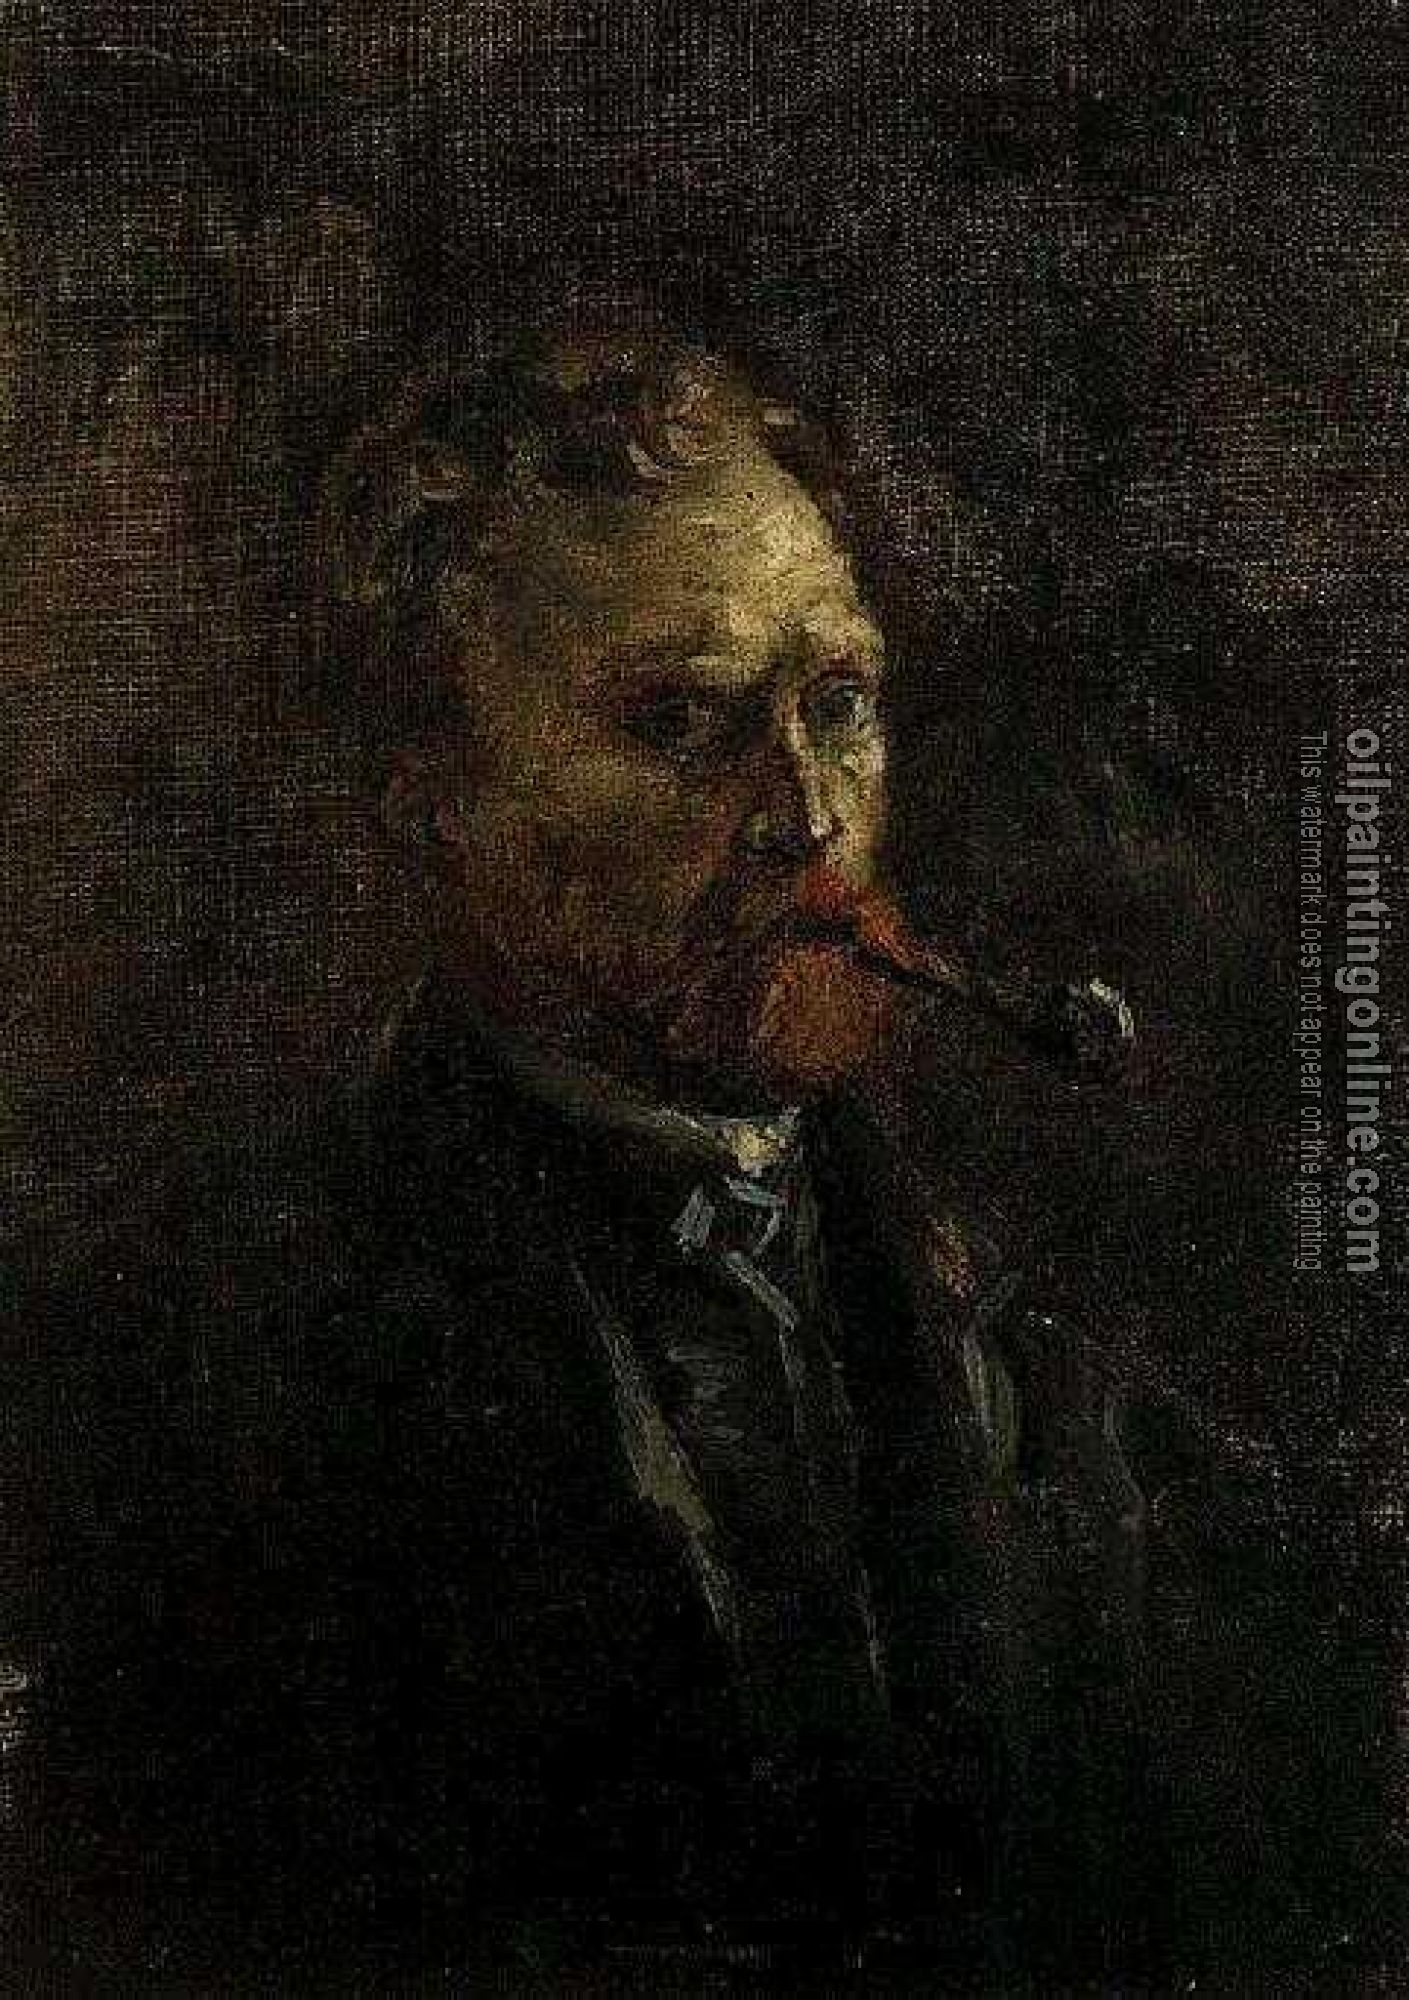 Gogh, Vincent van - Self Portrait with Pipe